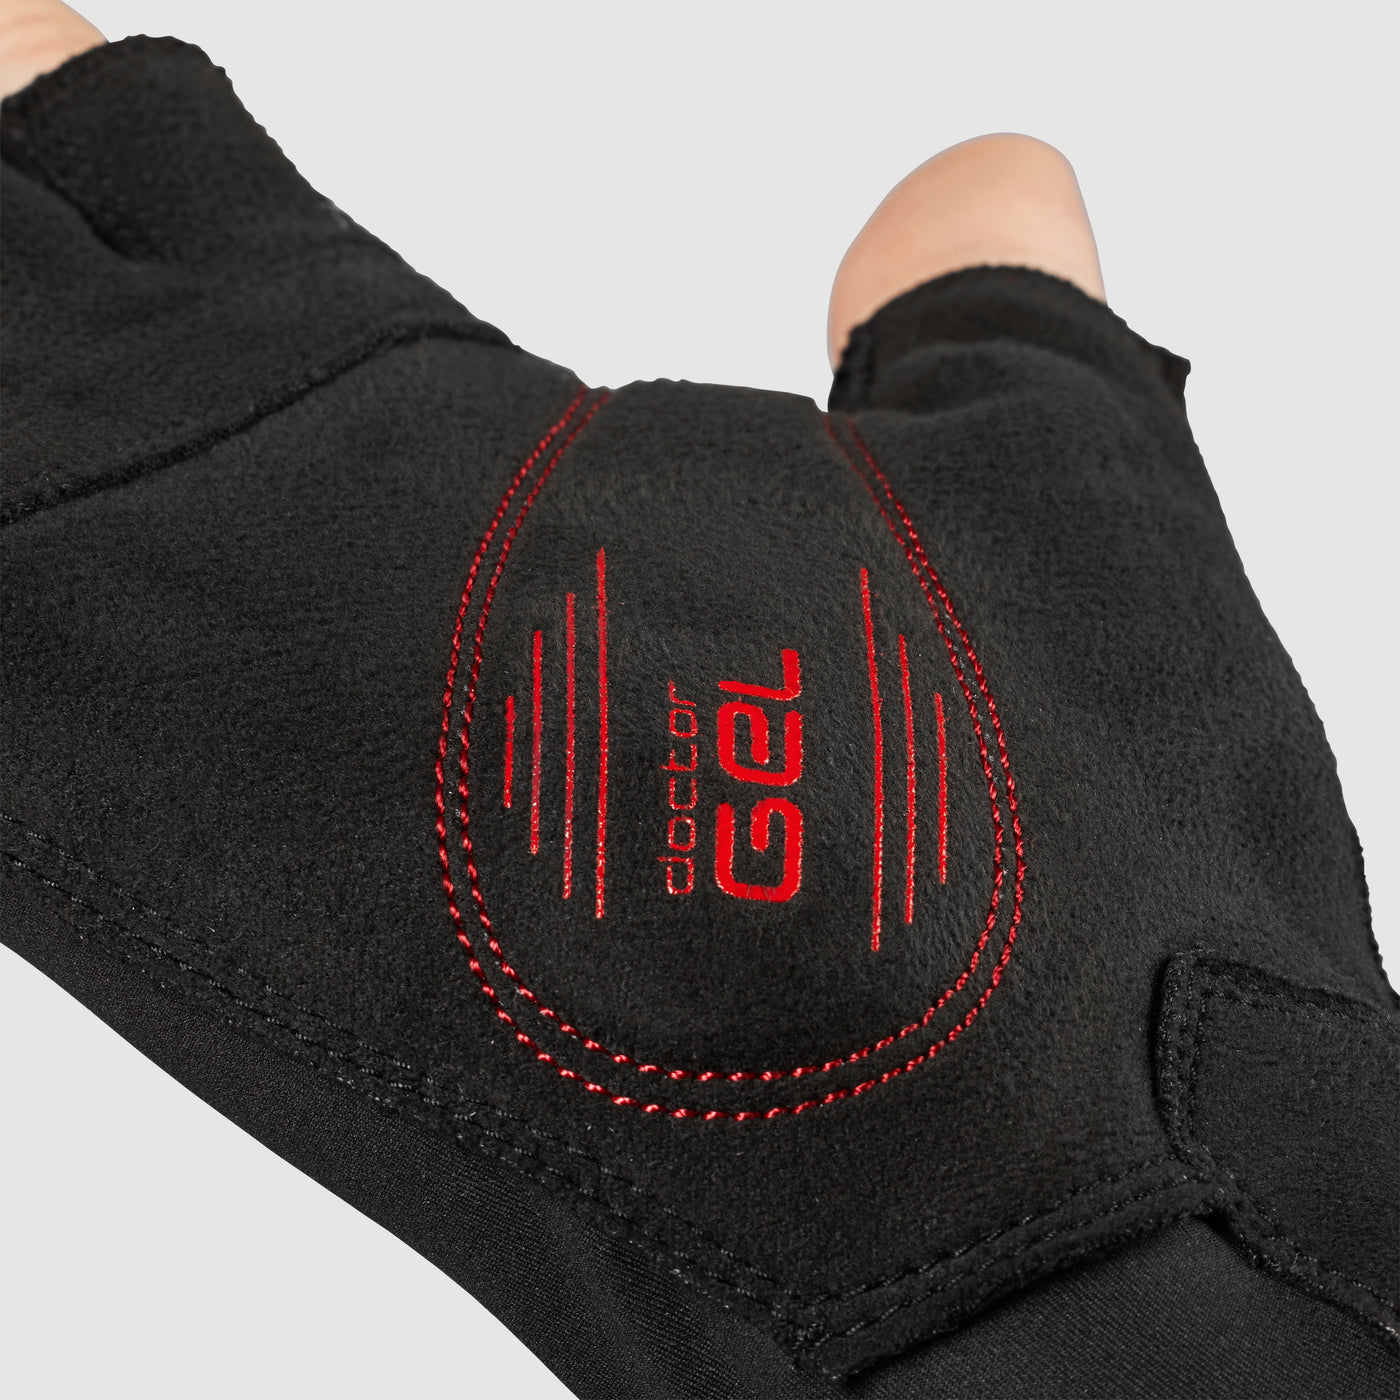 Aero TT RaceDay Time Trial Gloves